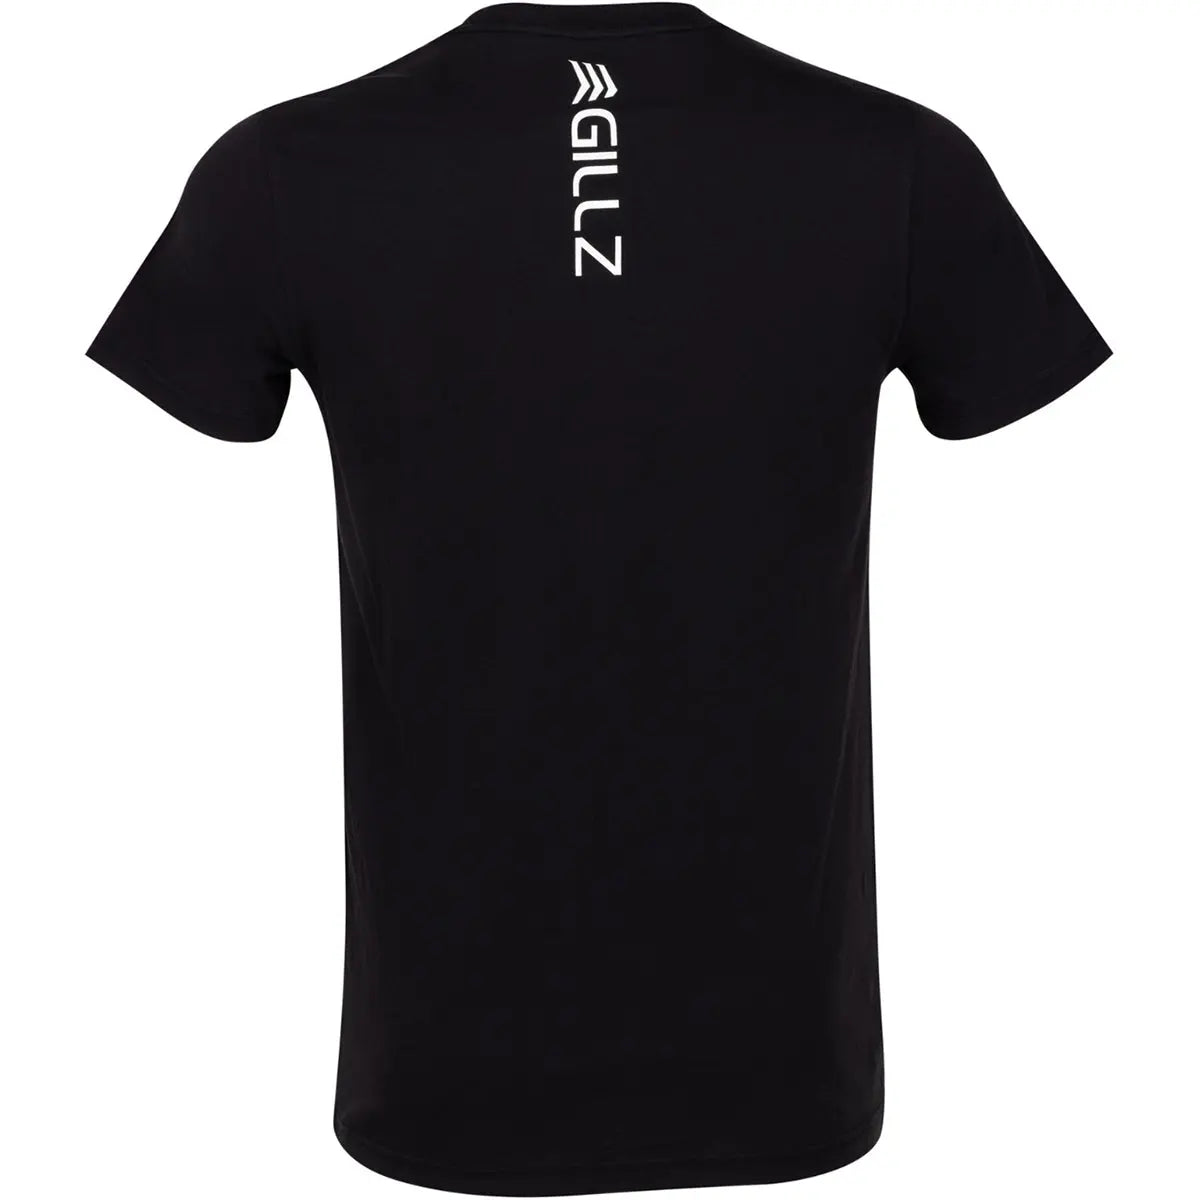 Gillz Contender Series T-Shirt - Anthracite Gillz